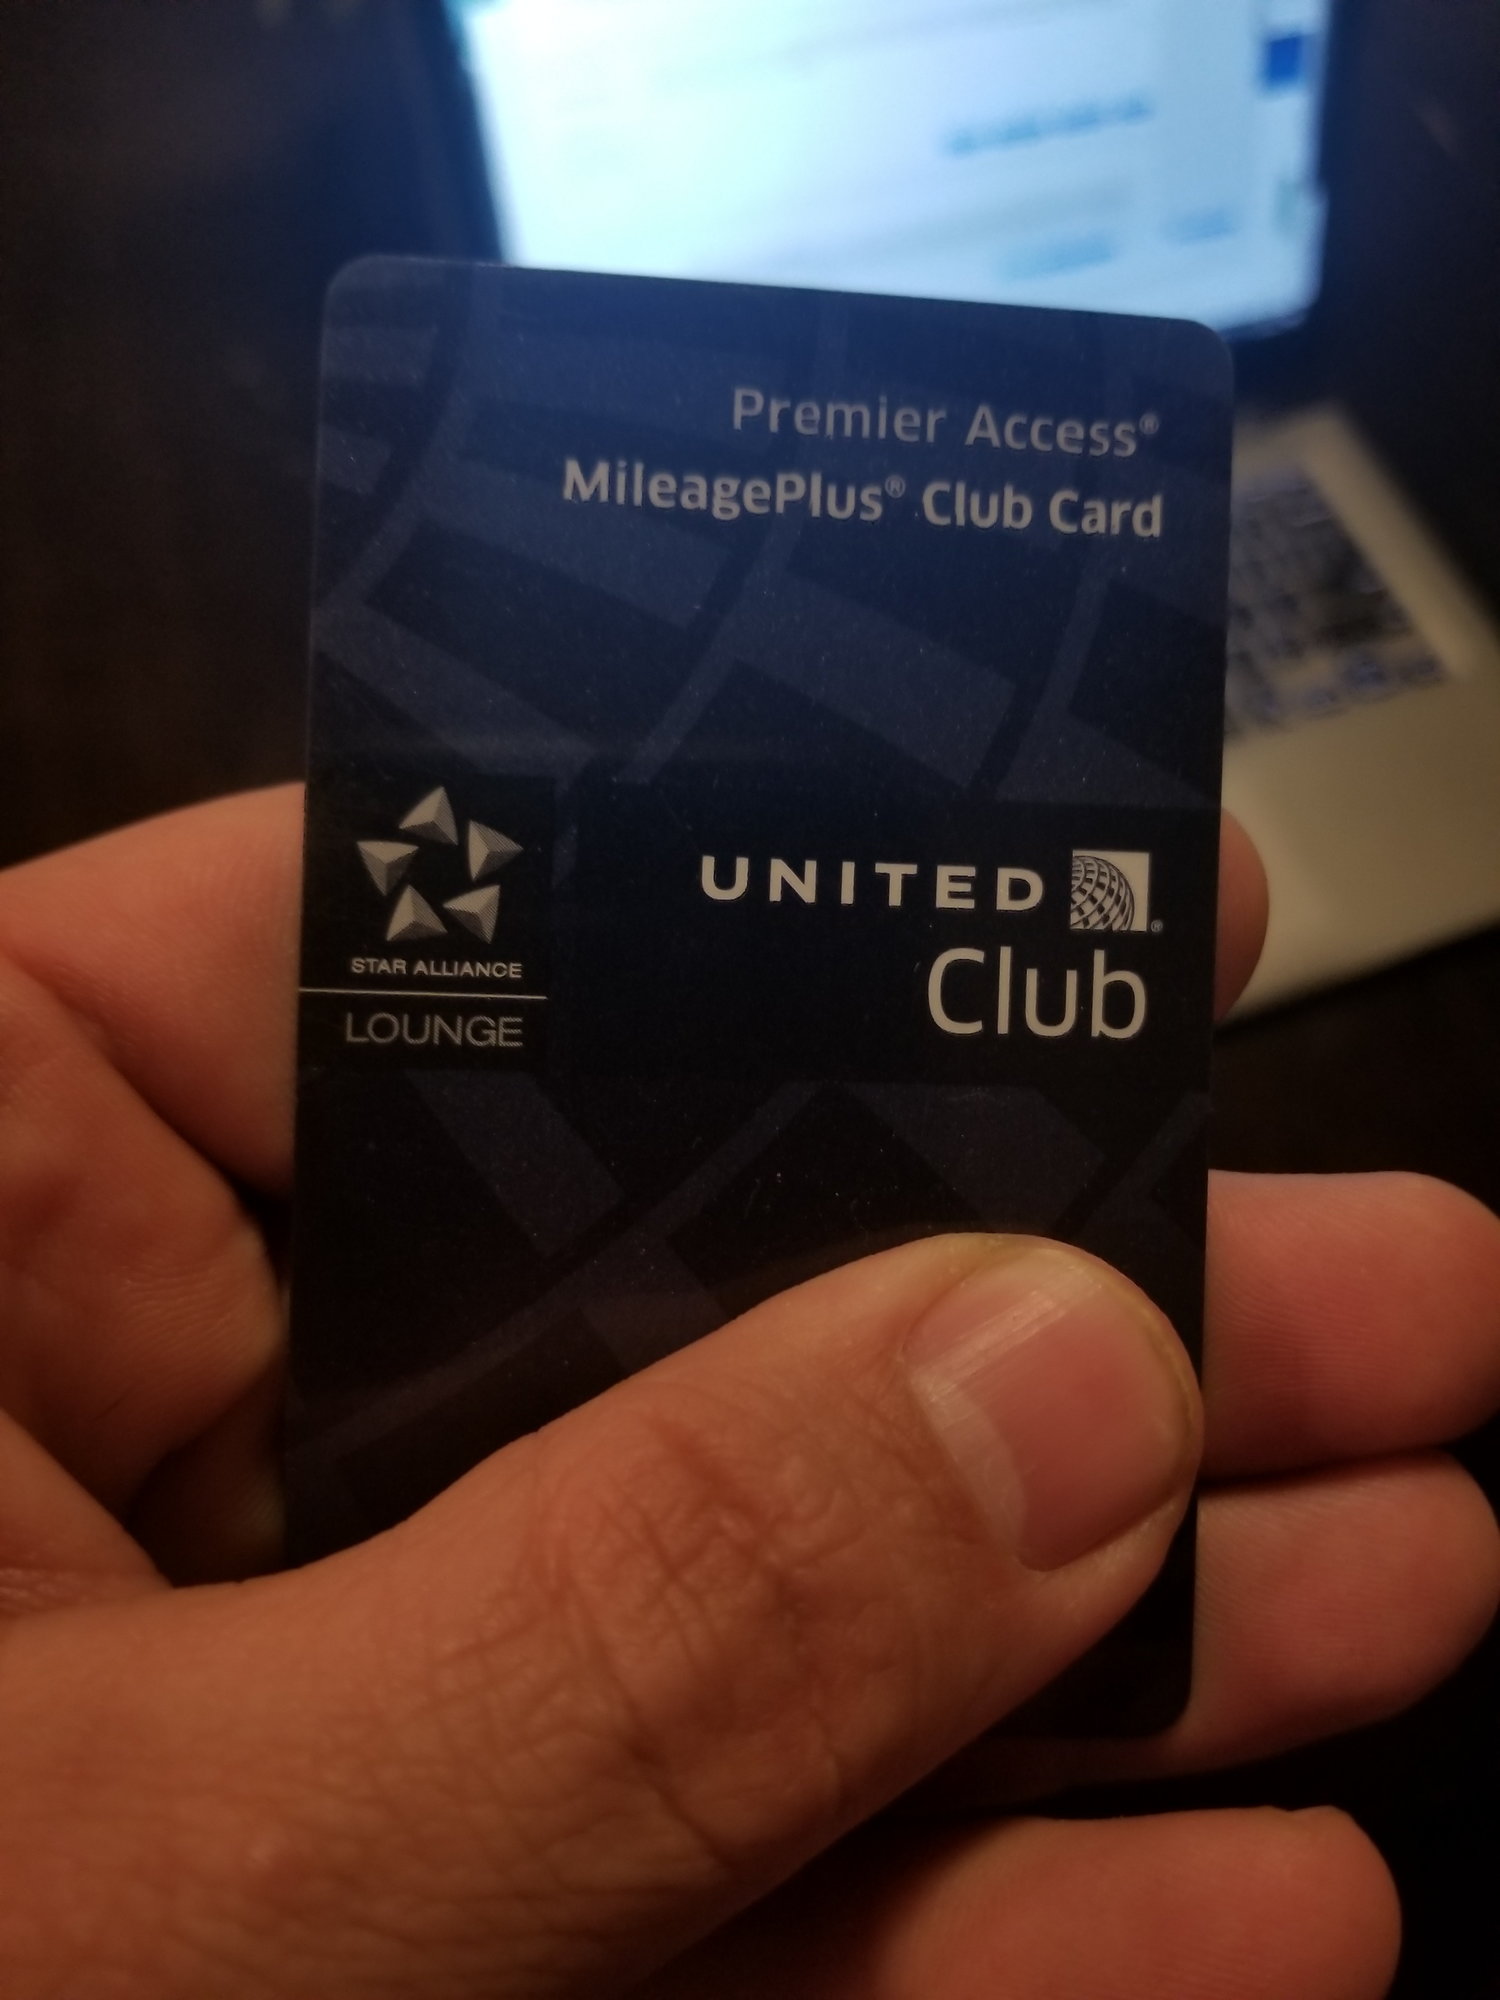 United Club Card Lounge benefits LAX - FlyerTalk Forums